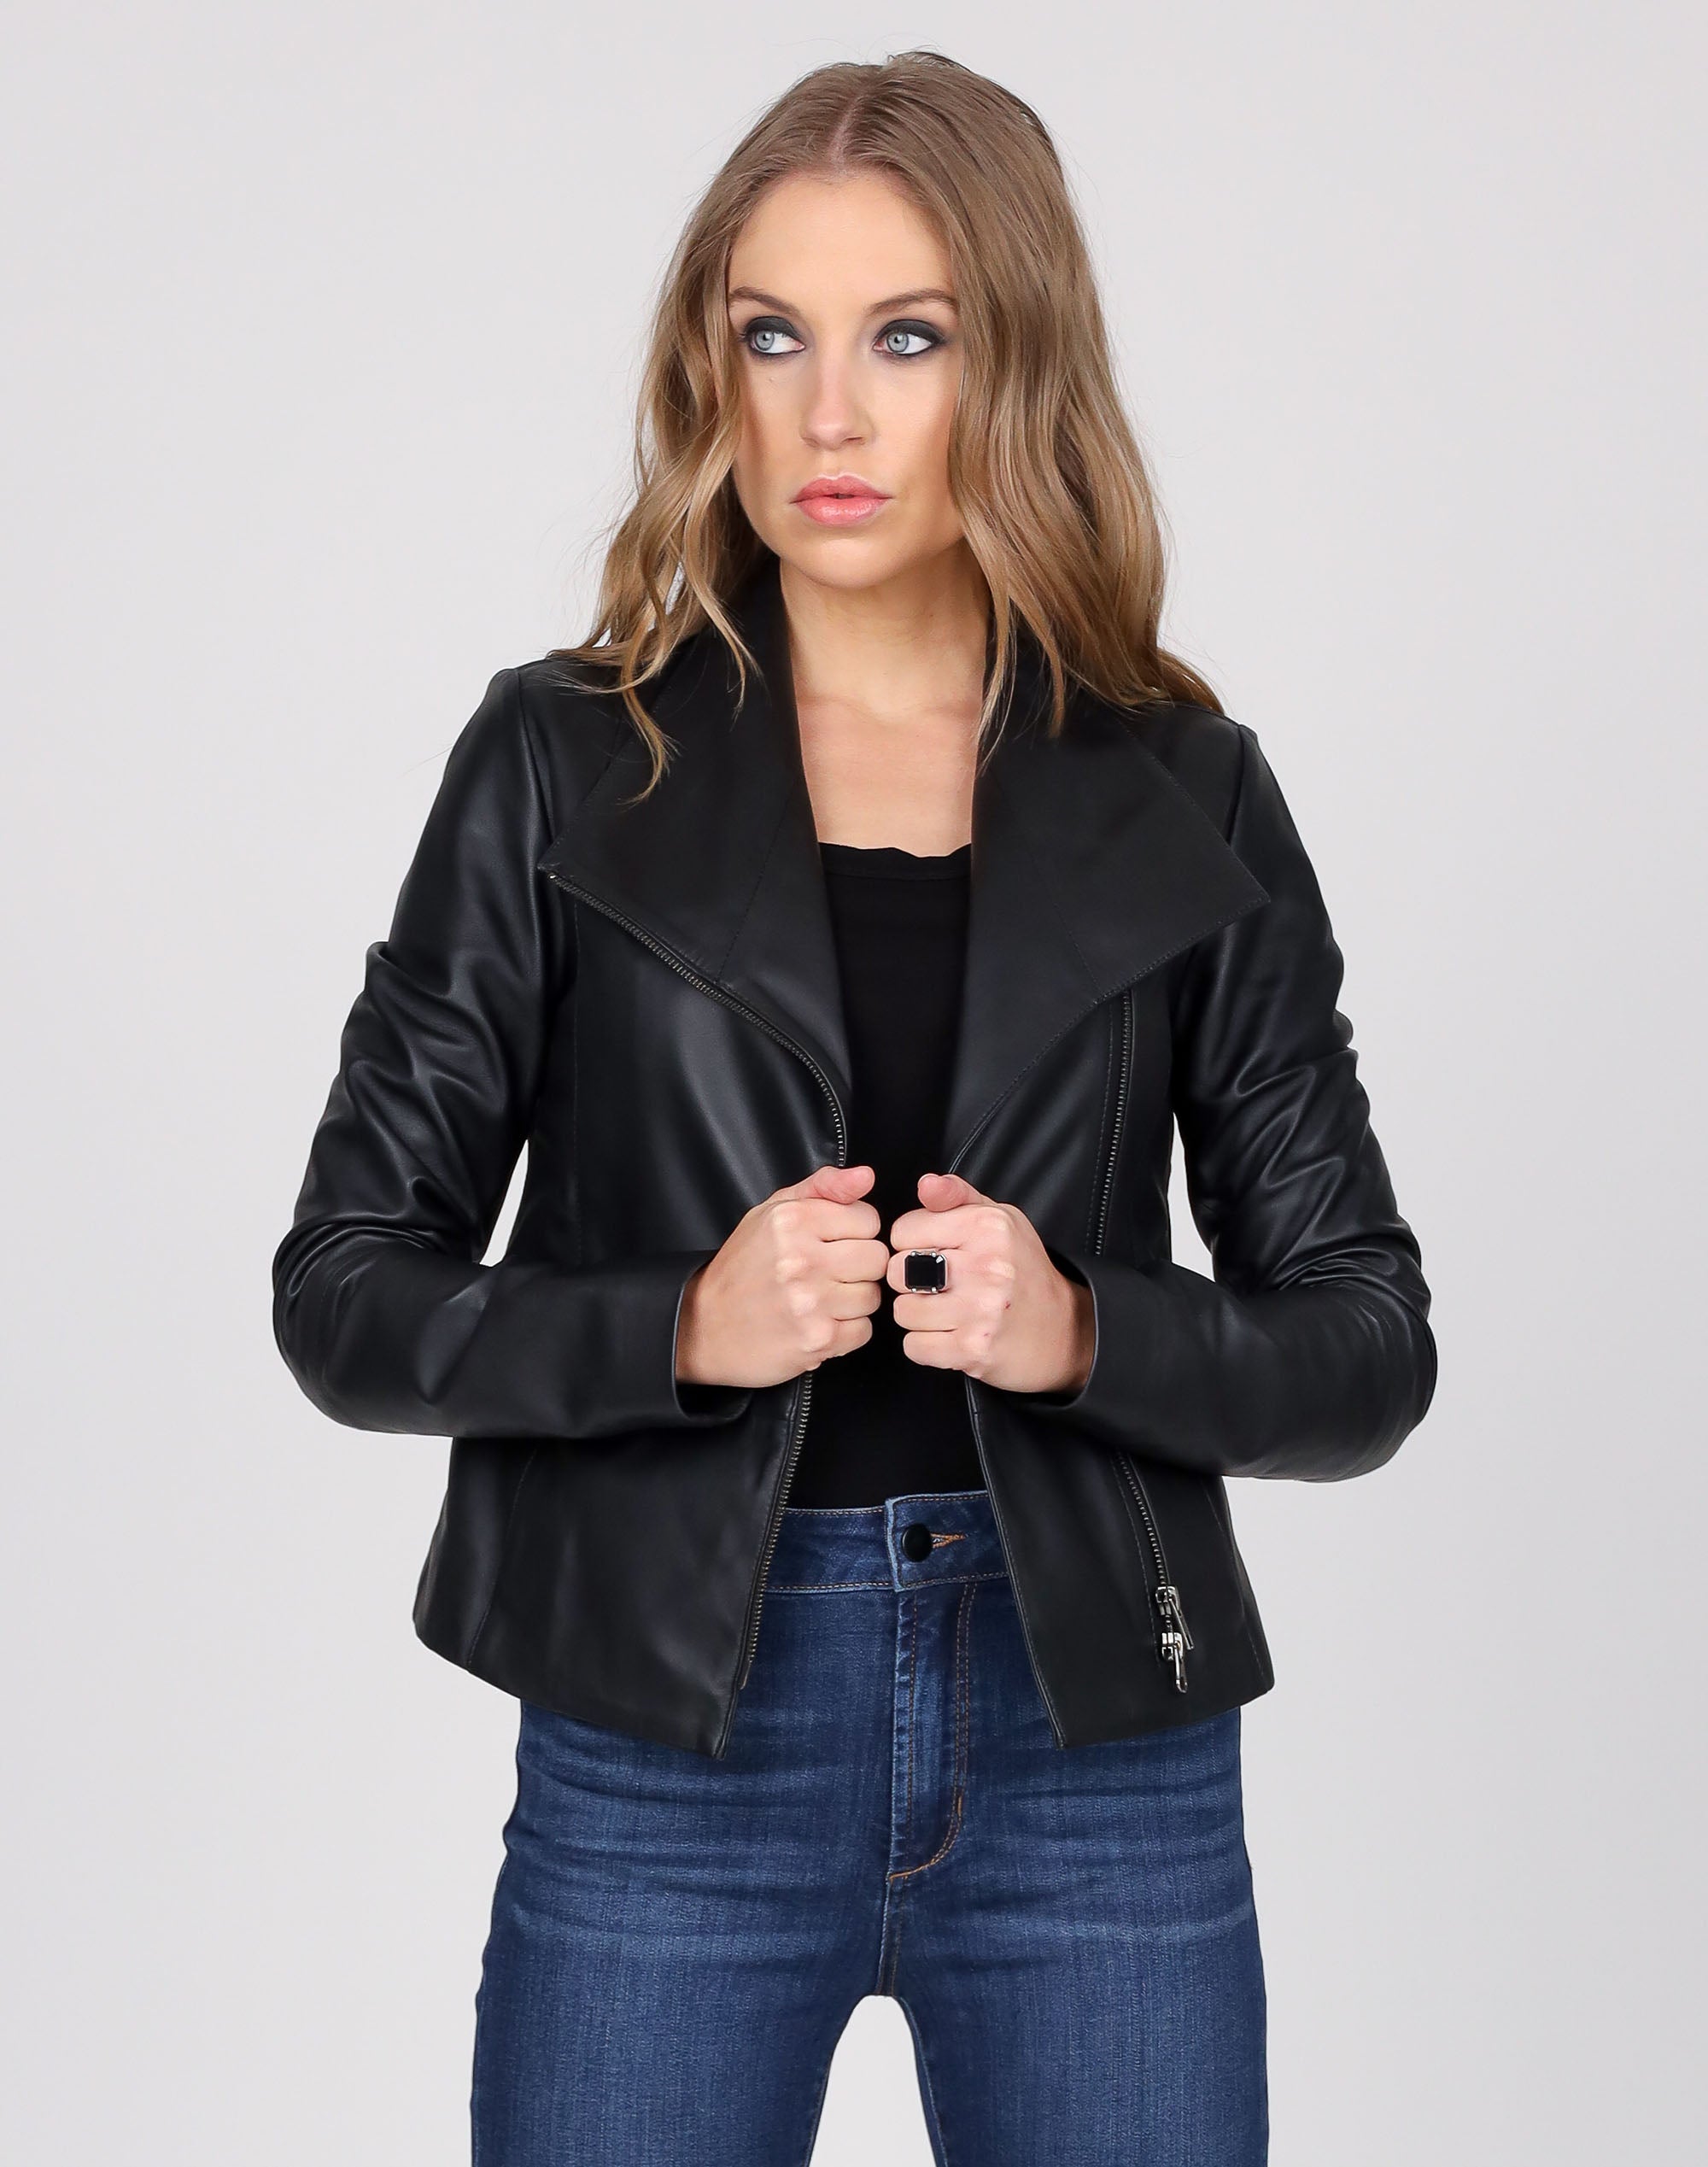 Krave Leather Jacket